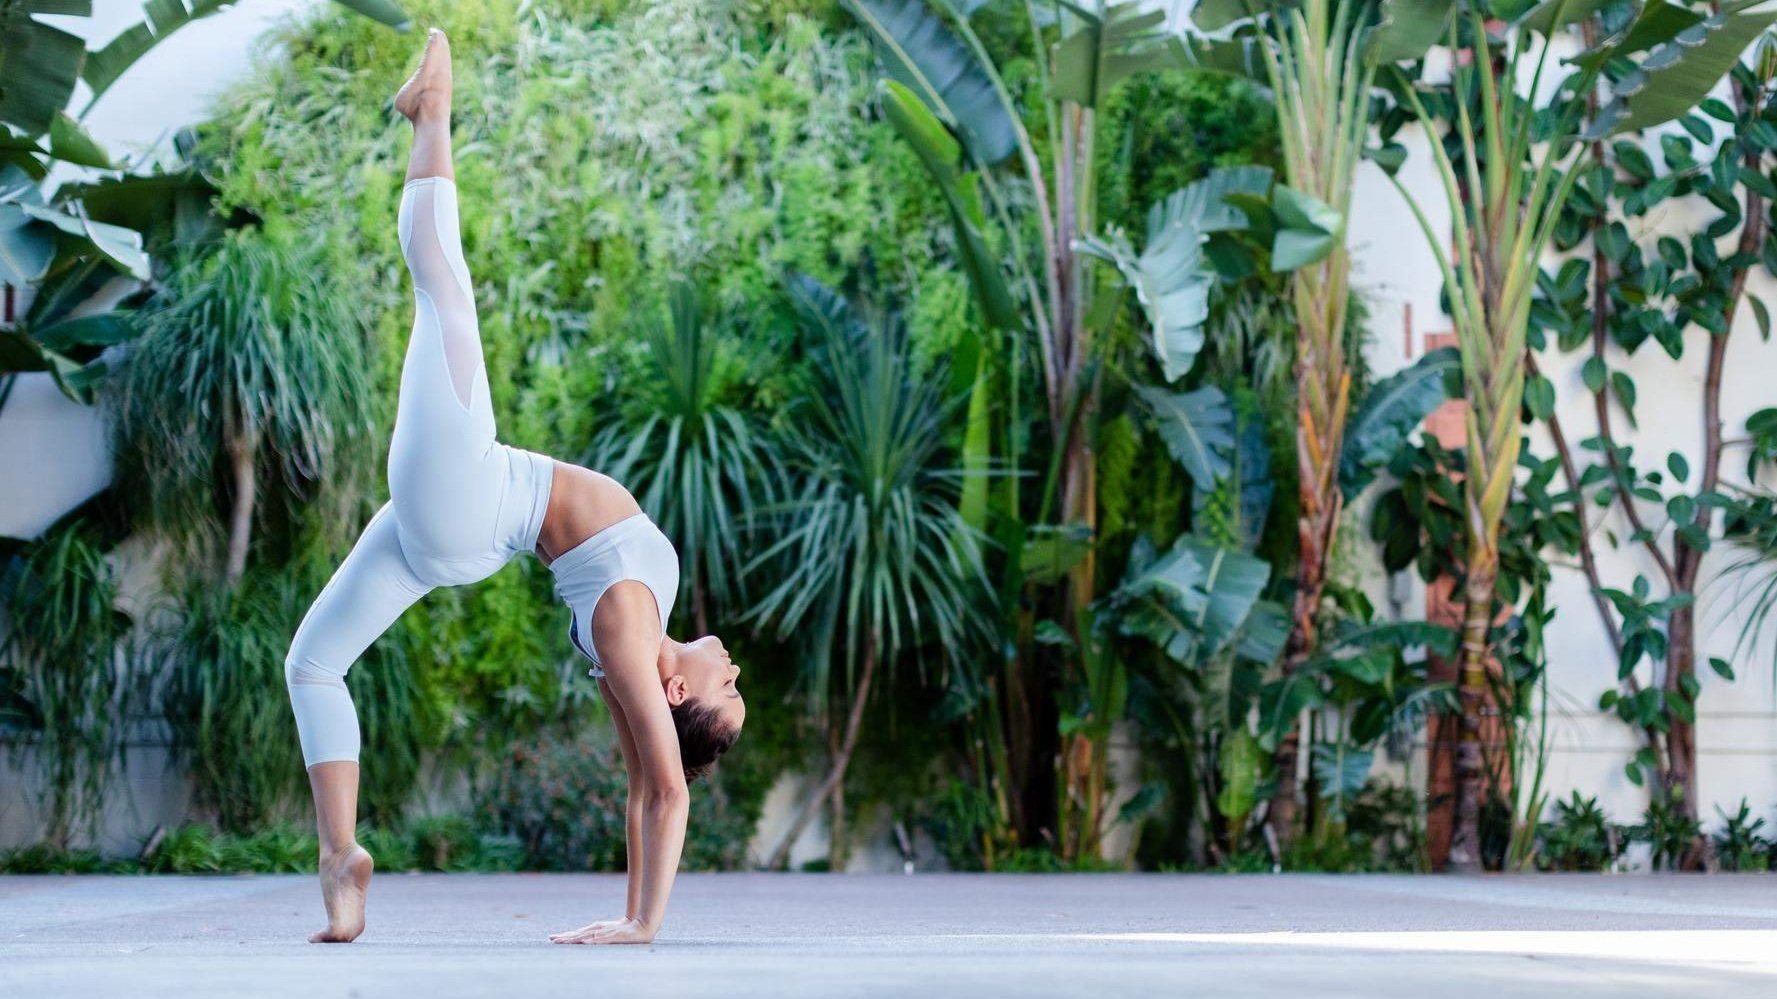 Sethubandasana – Bridge building pose - School of Yoga